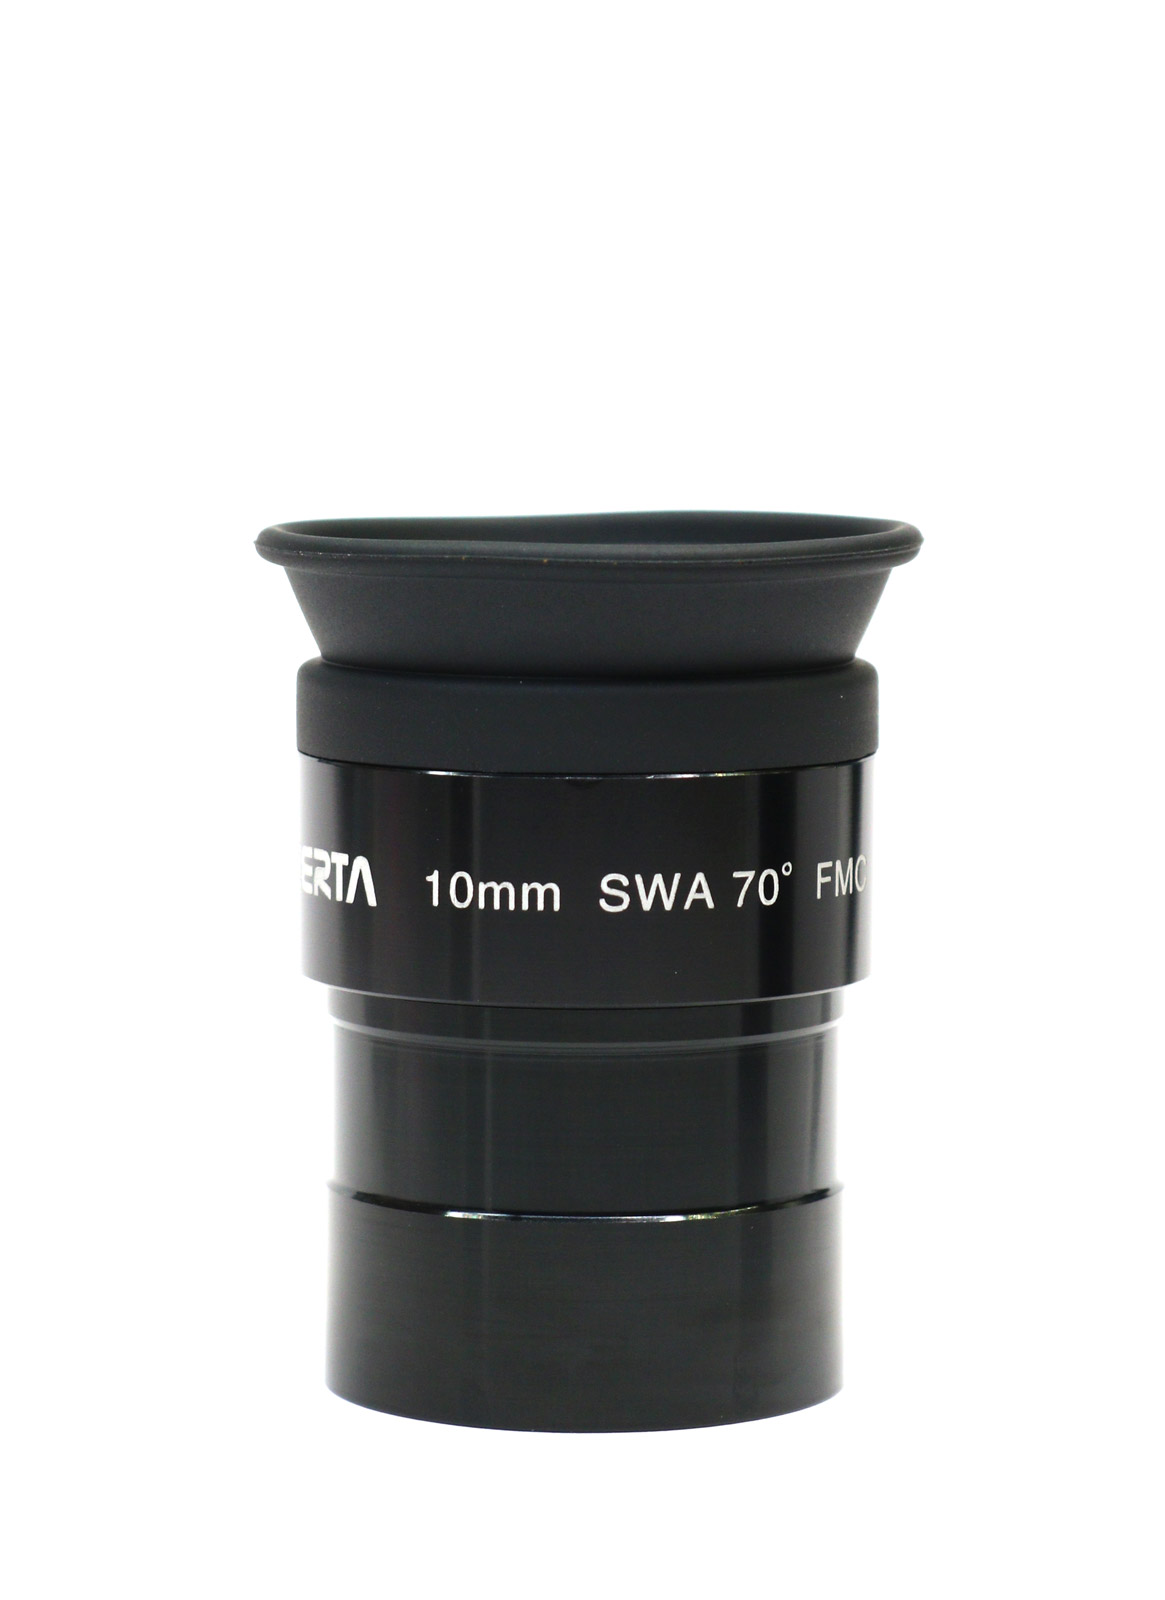 10 mm-es Lacerta SWA okulár